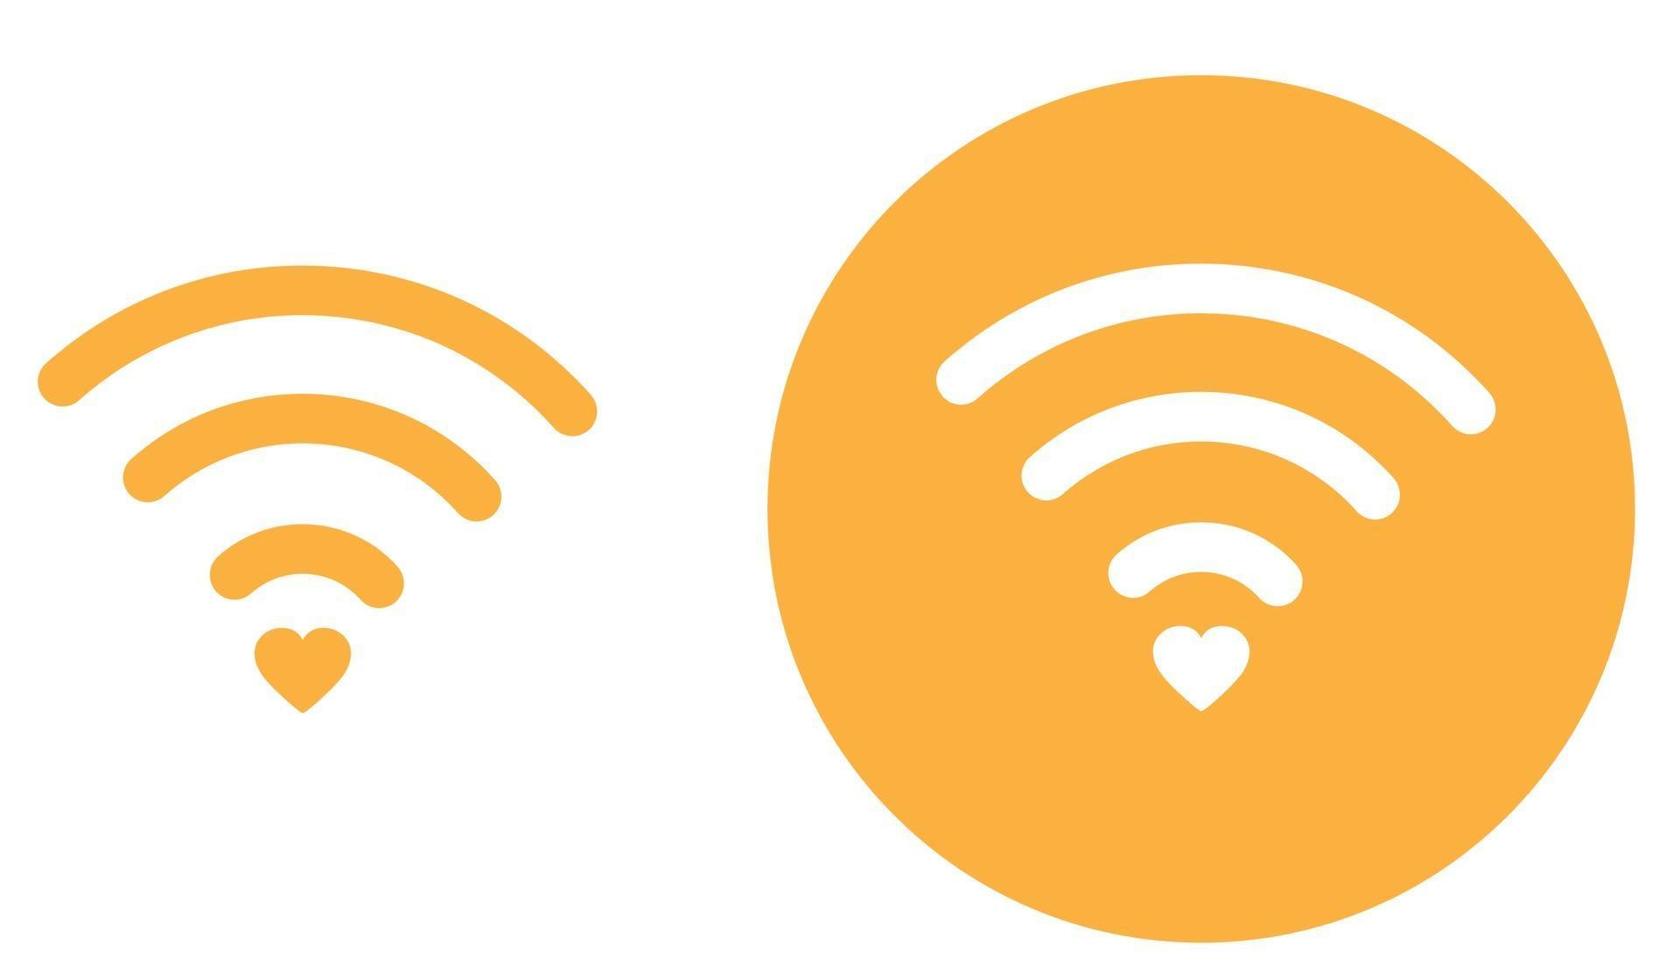 wifi heart icon. Vector illustration